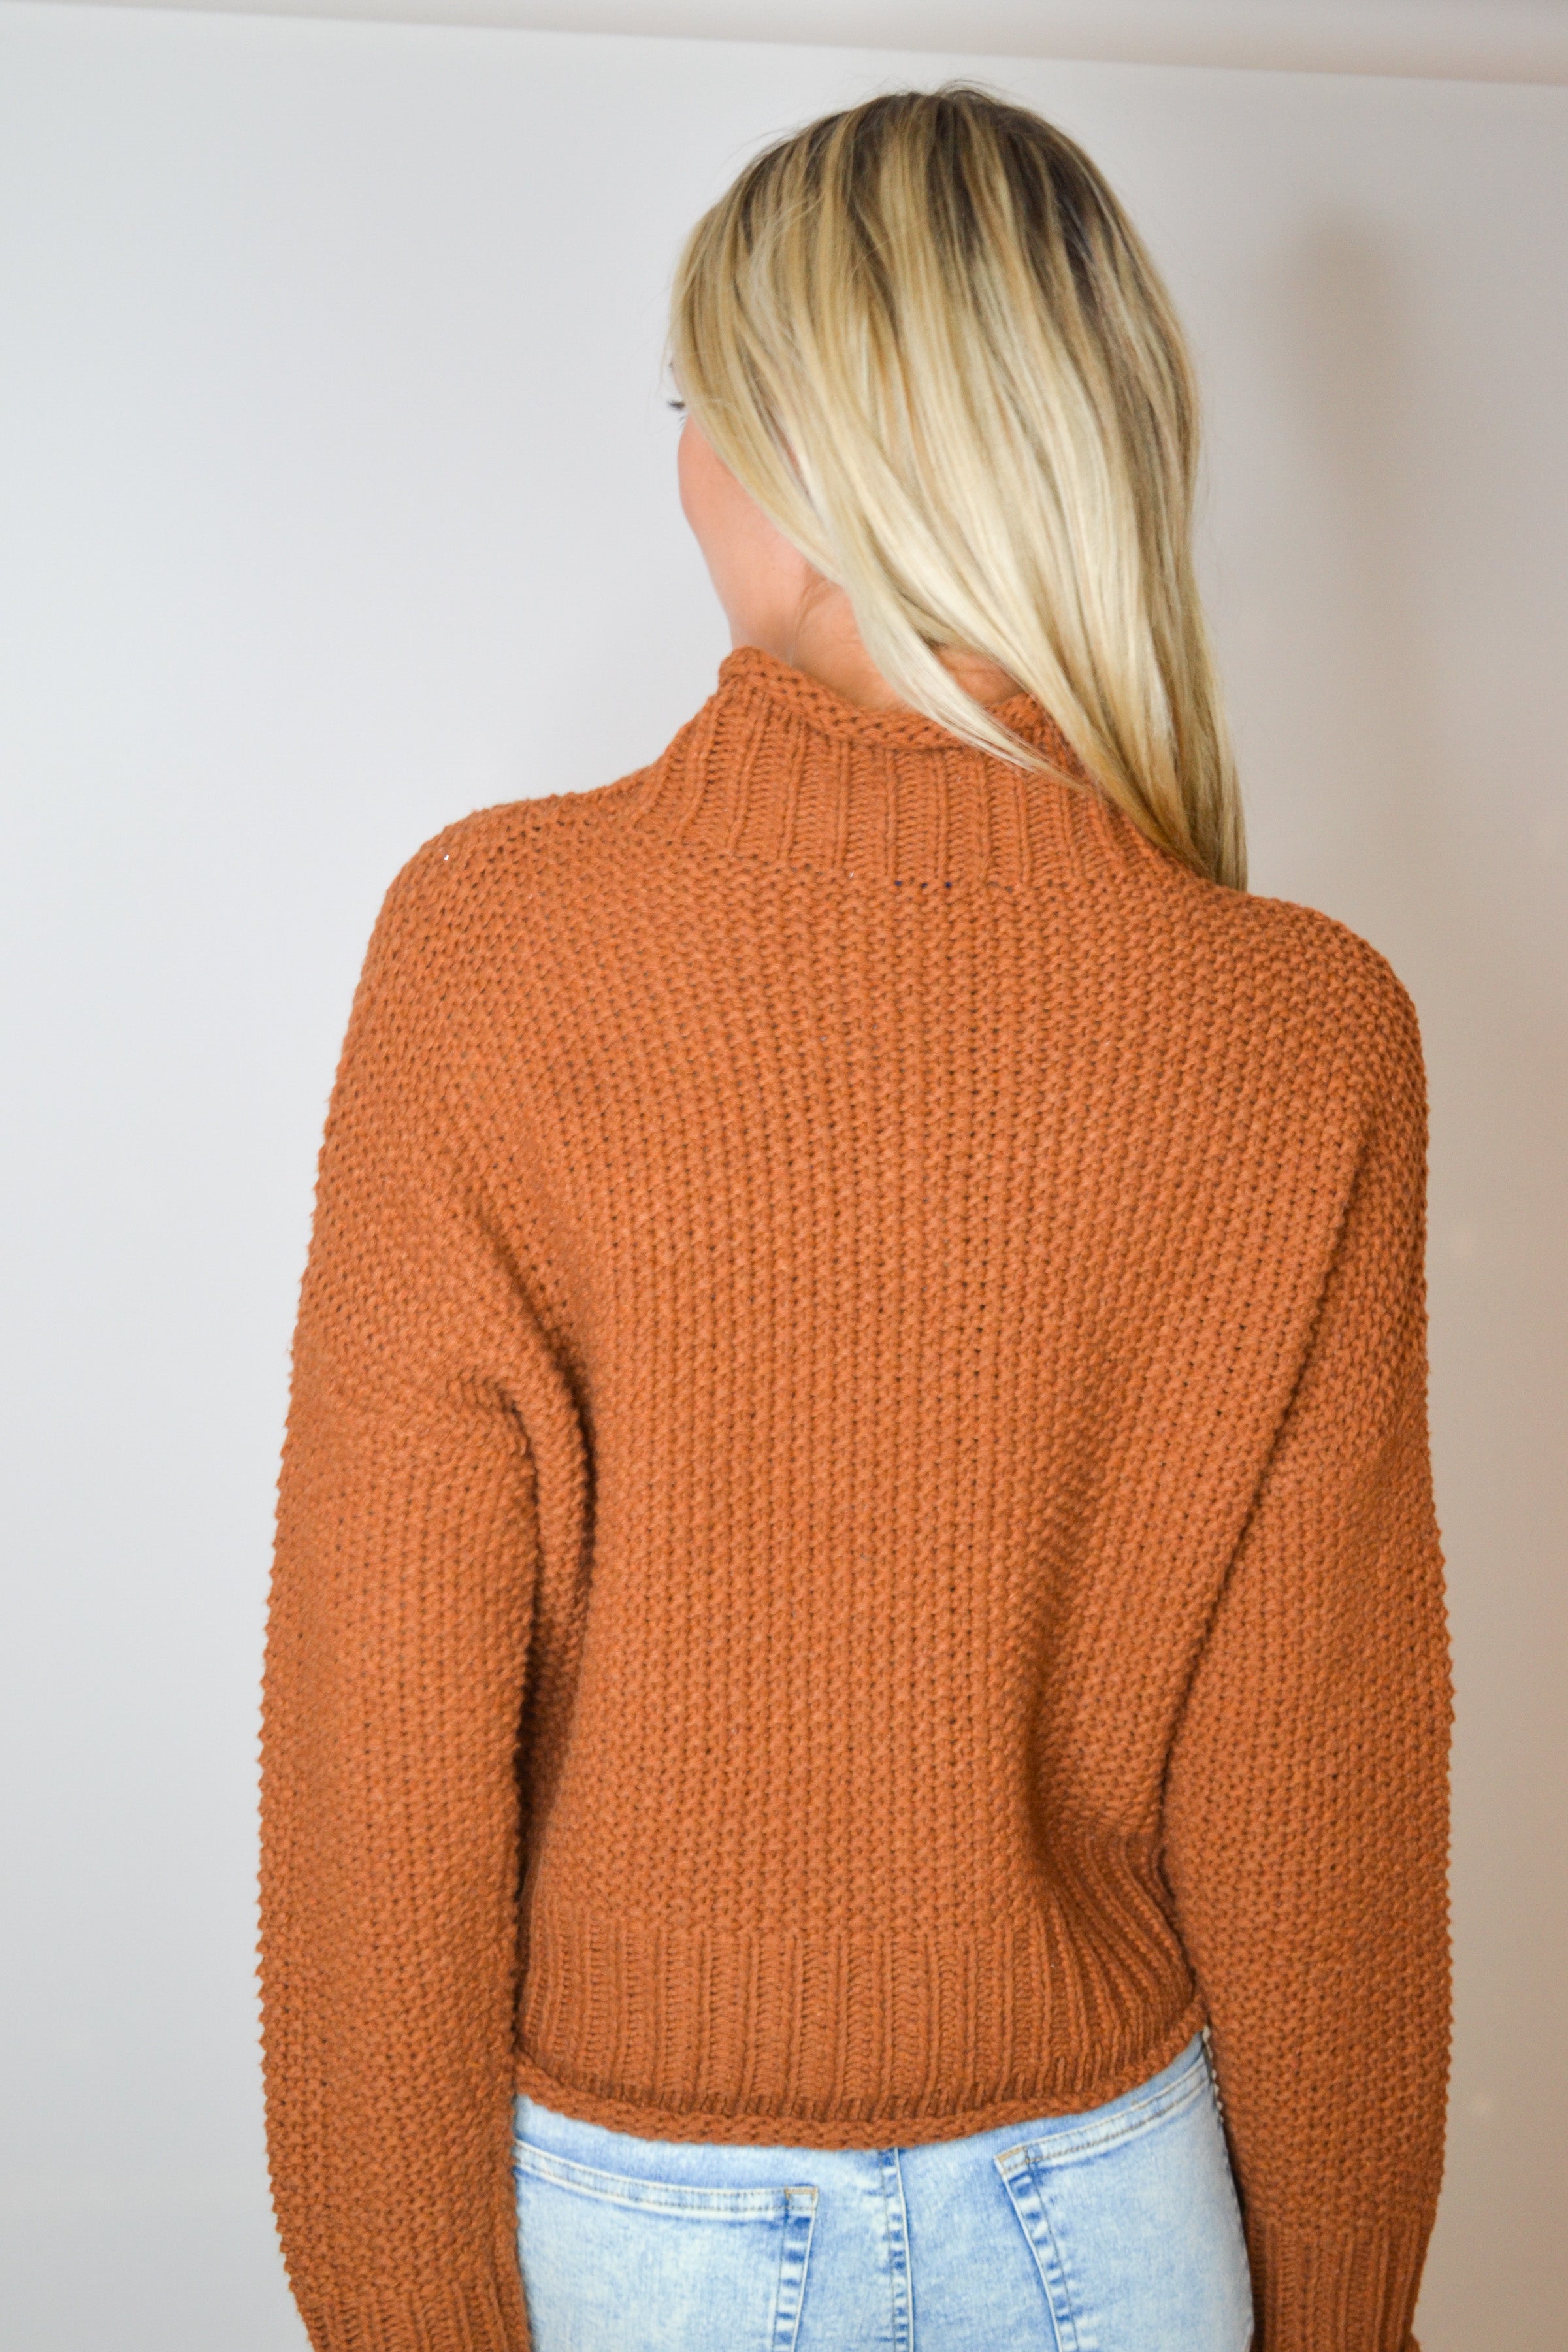 Cinnamon Dolce Sweater